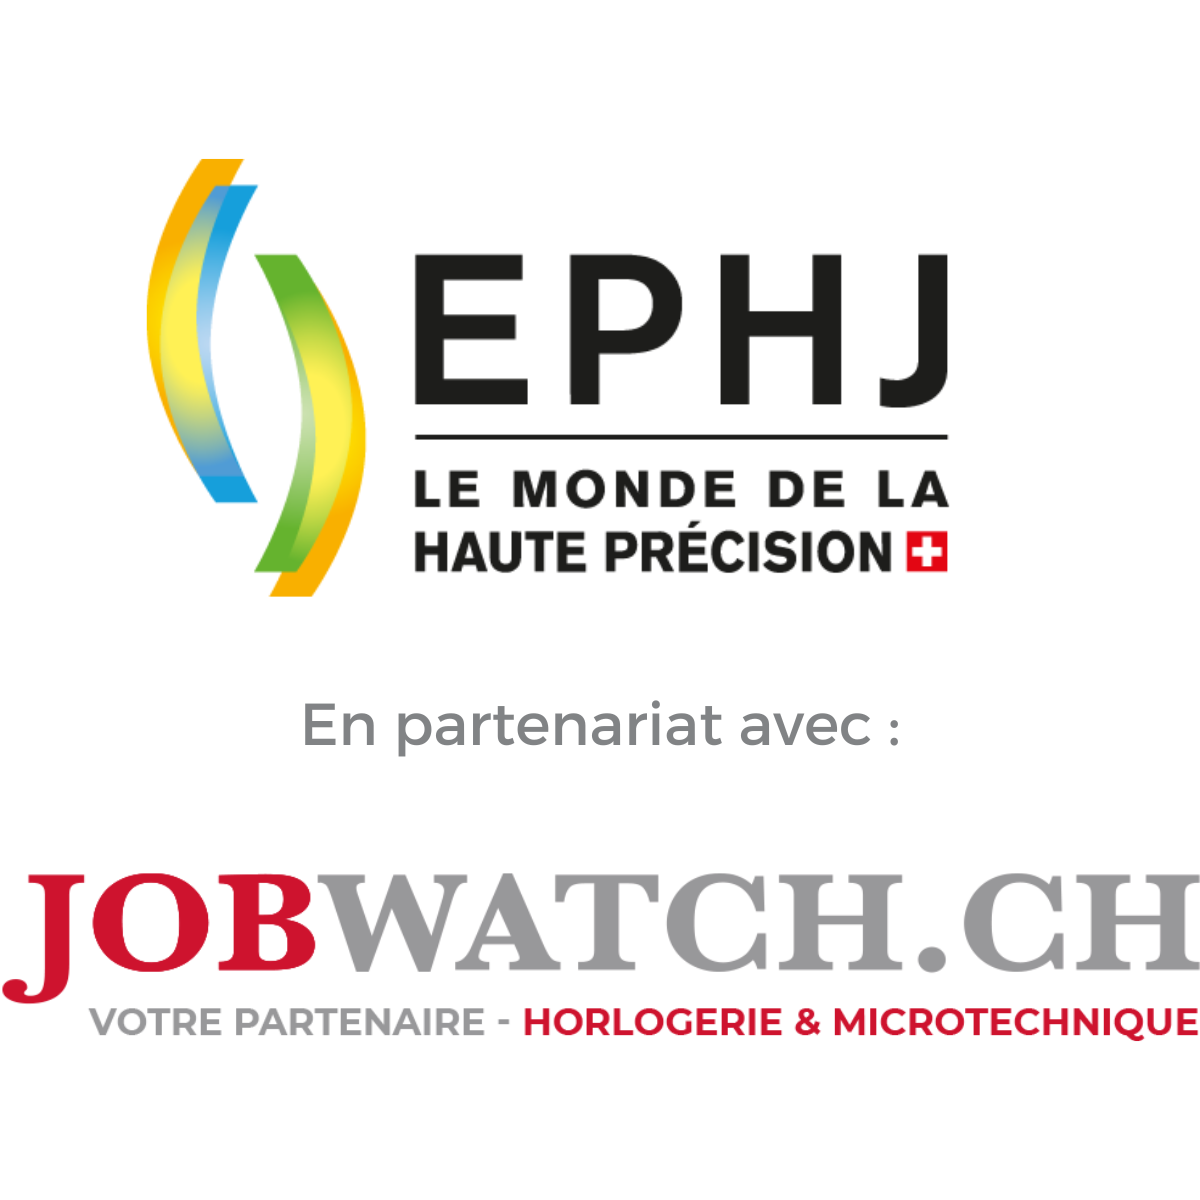 Job Watch partenaire du salon EPHJ